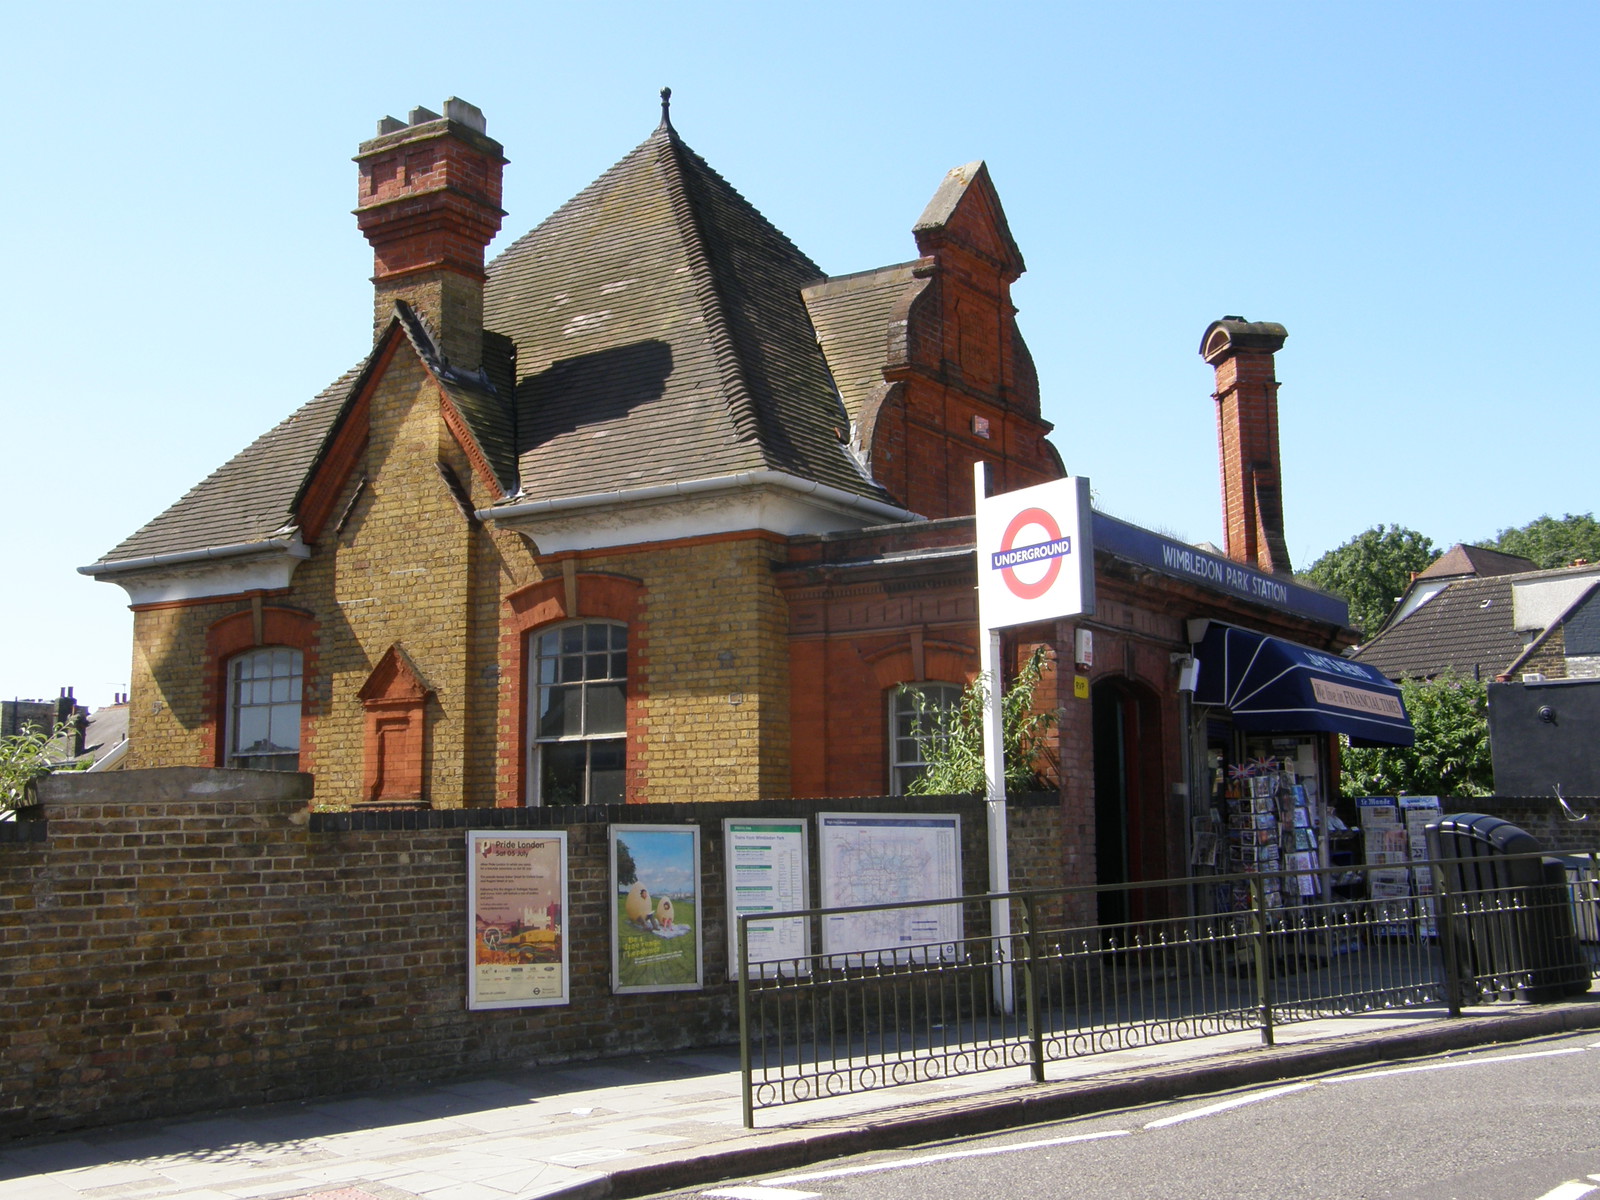 Wimbledon Park station